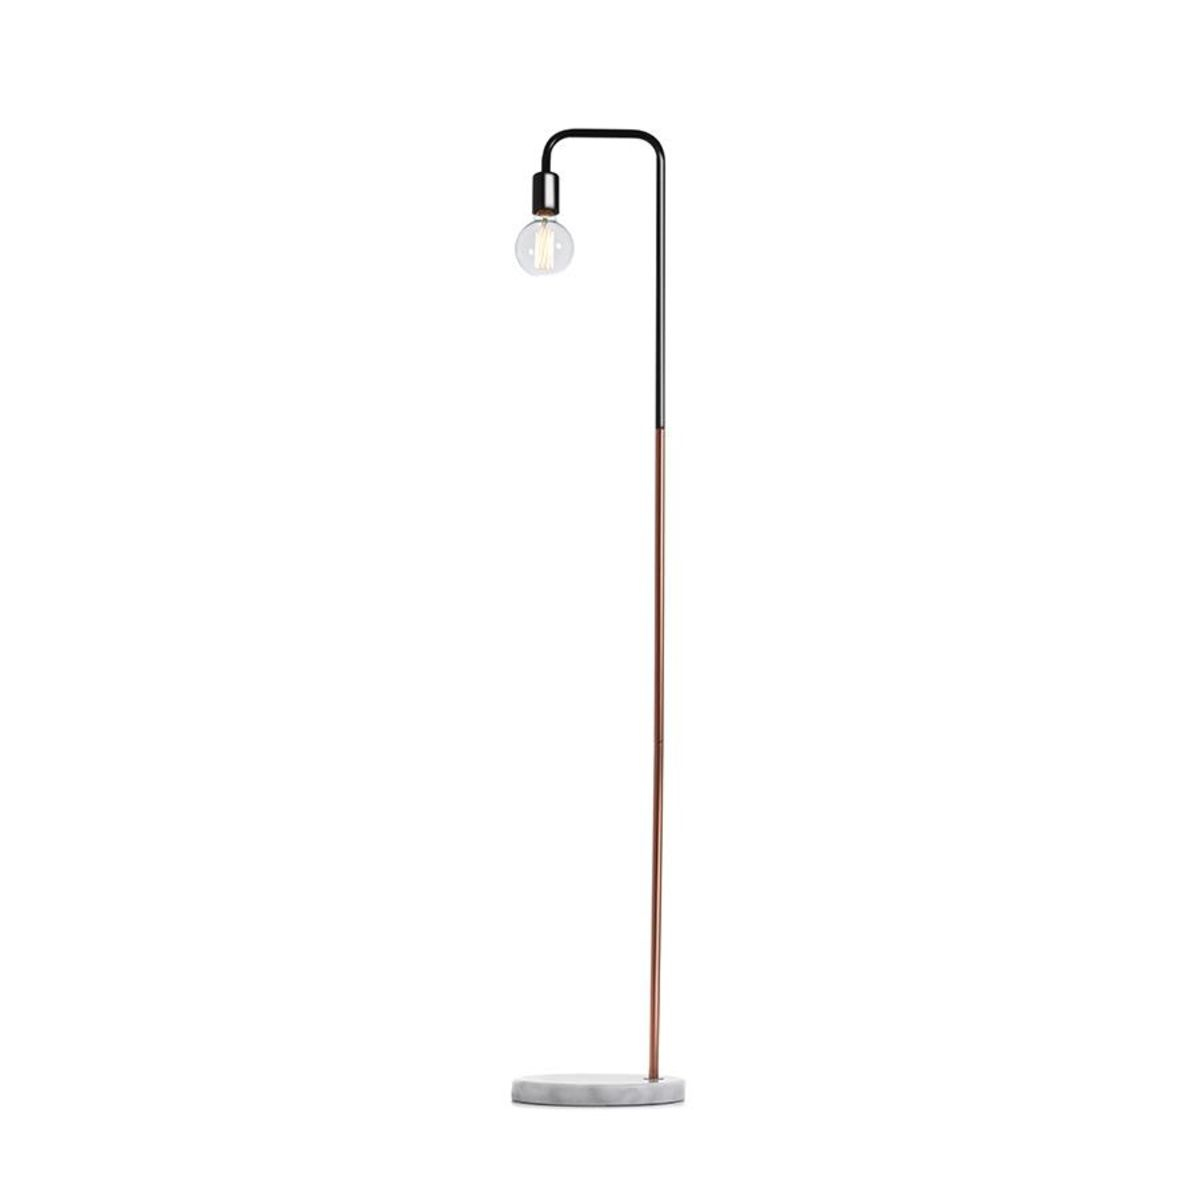 Marmo Floor Lamp Floor Lamp Industrial Floor Lamps pertaining to size 1200 X 1200